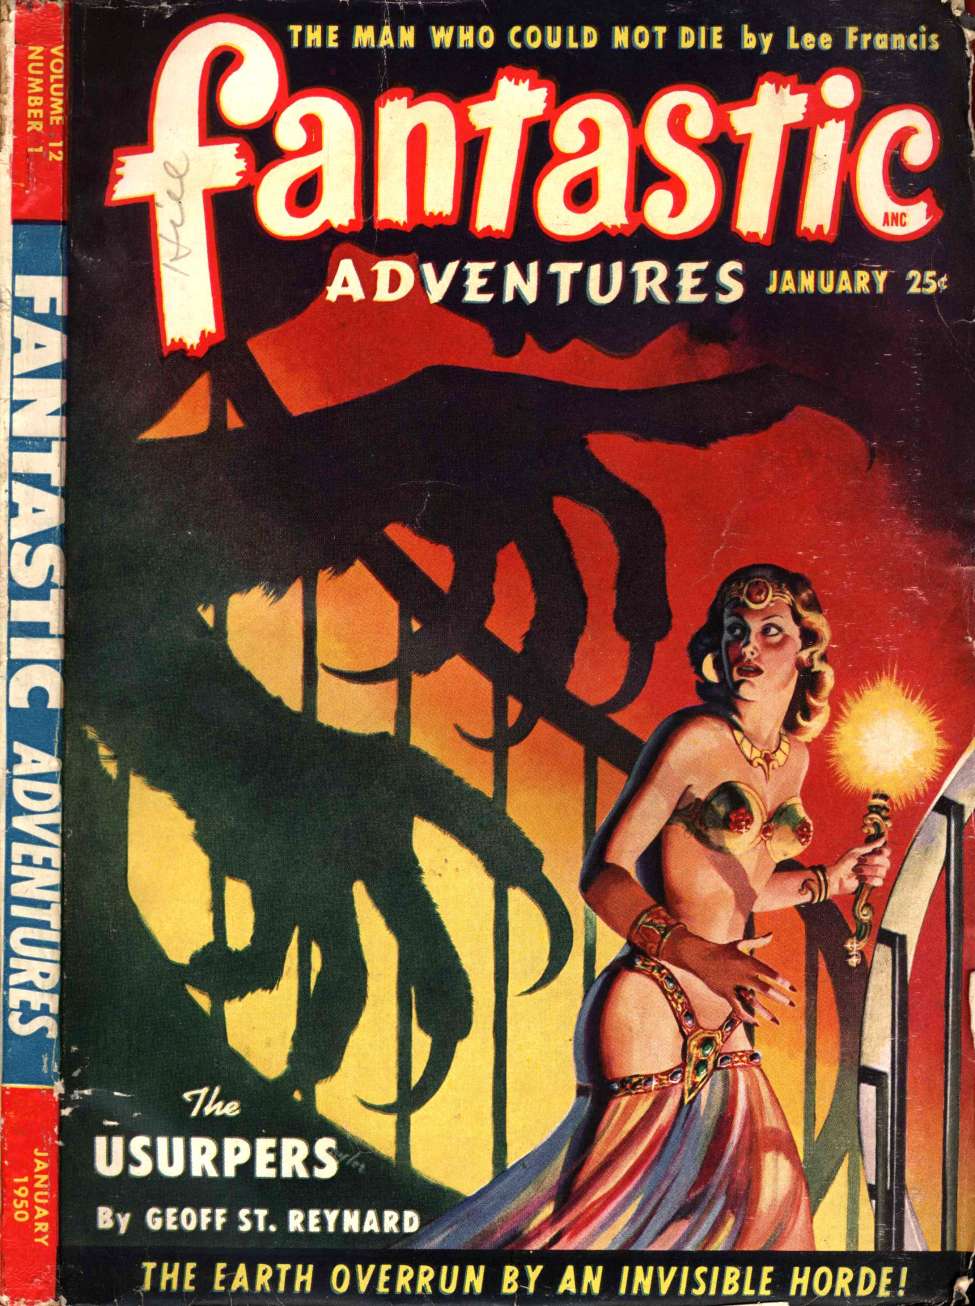 Book Cover For Fantastic Adventures v12 1 - The Usurpers - Geoff St. Reynard